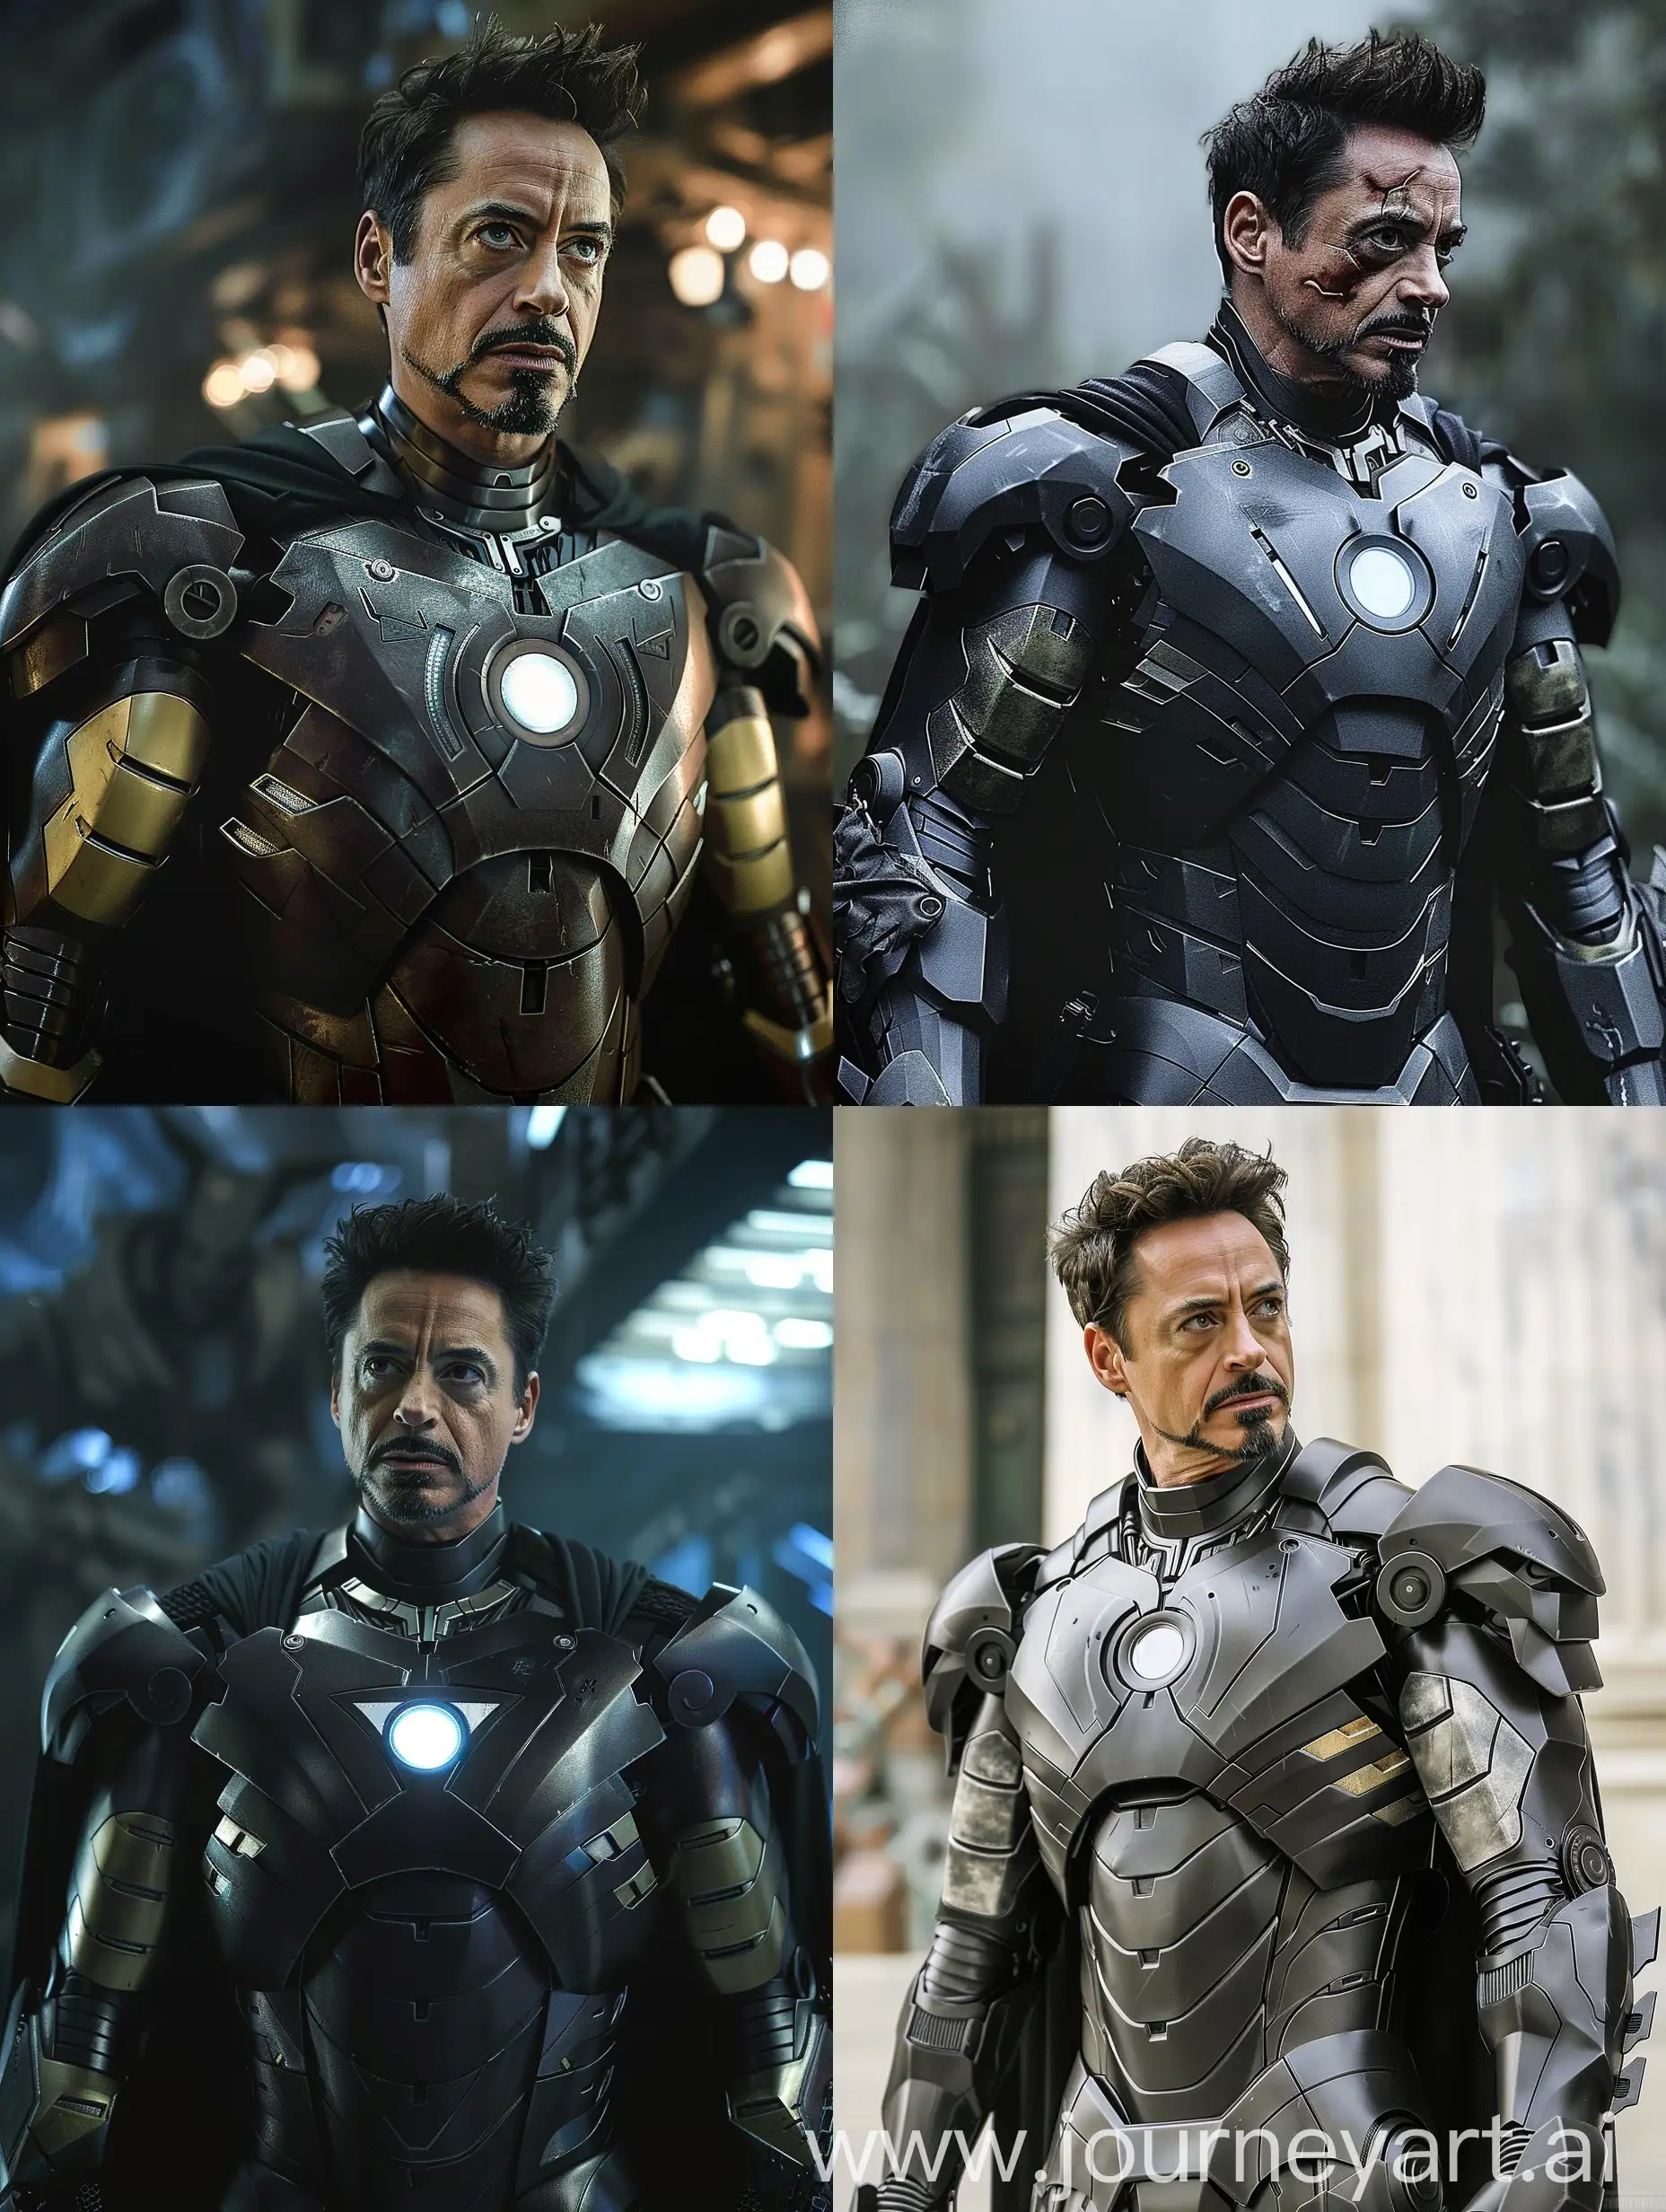 Tony Stark but he is wearing a Batman inspired Iron Man Suit